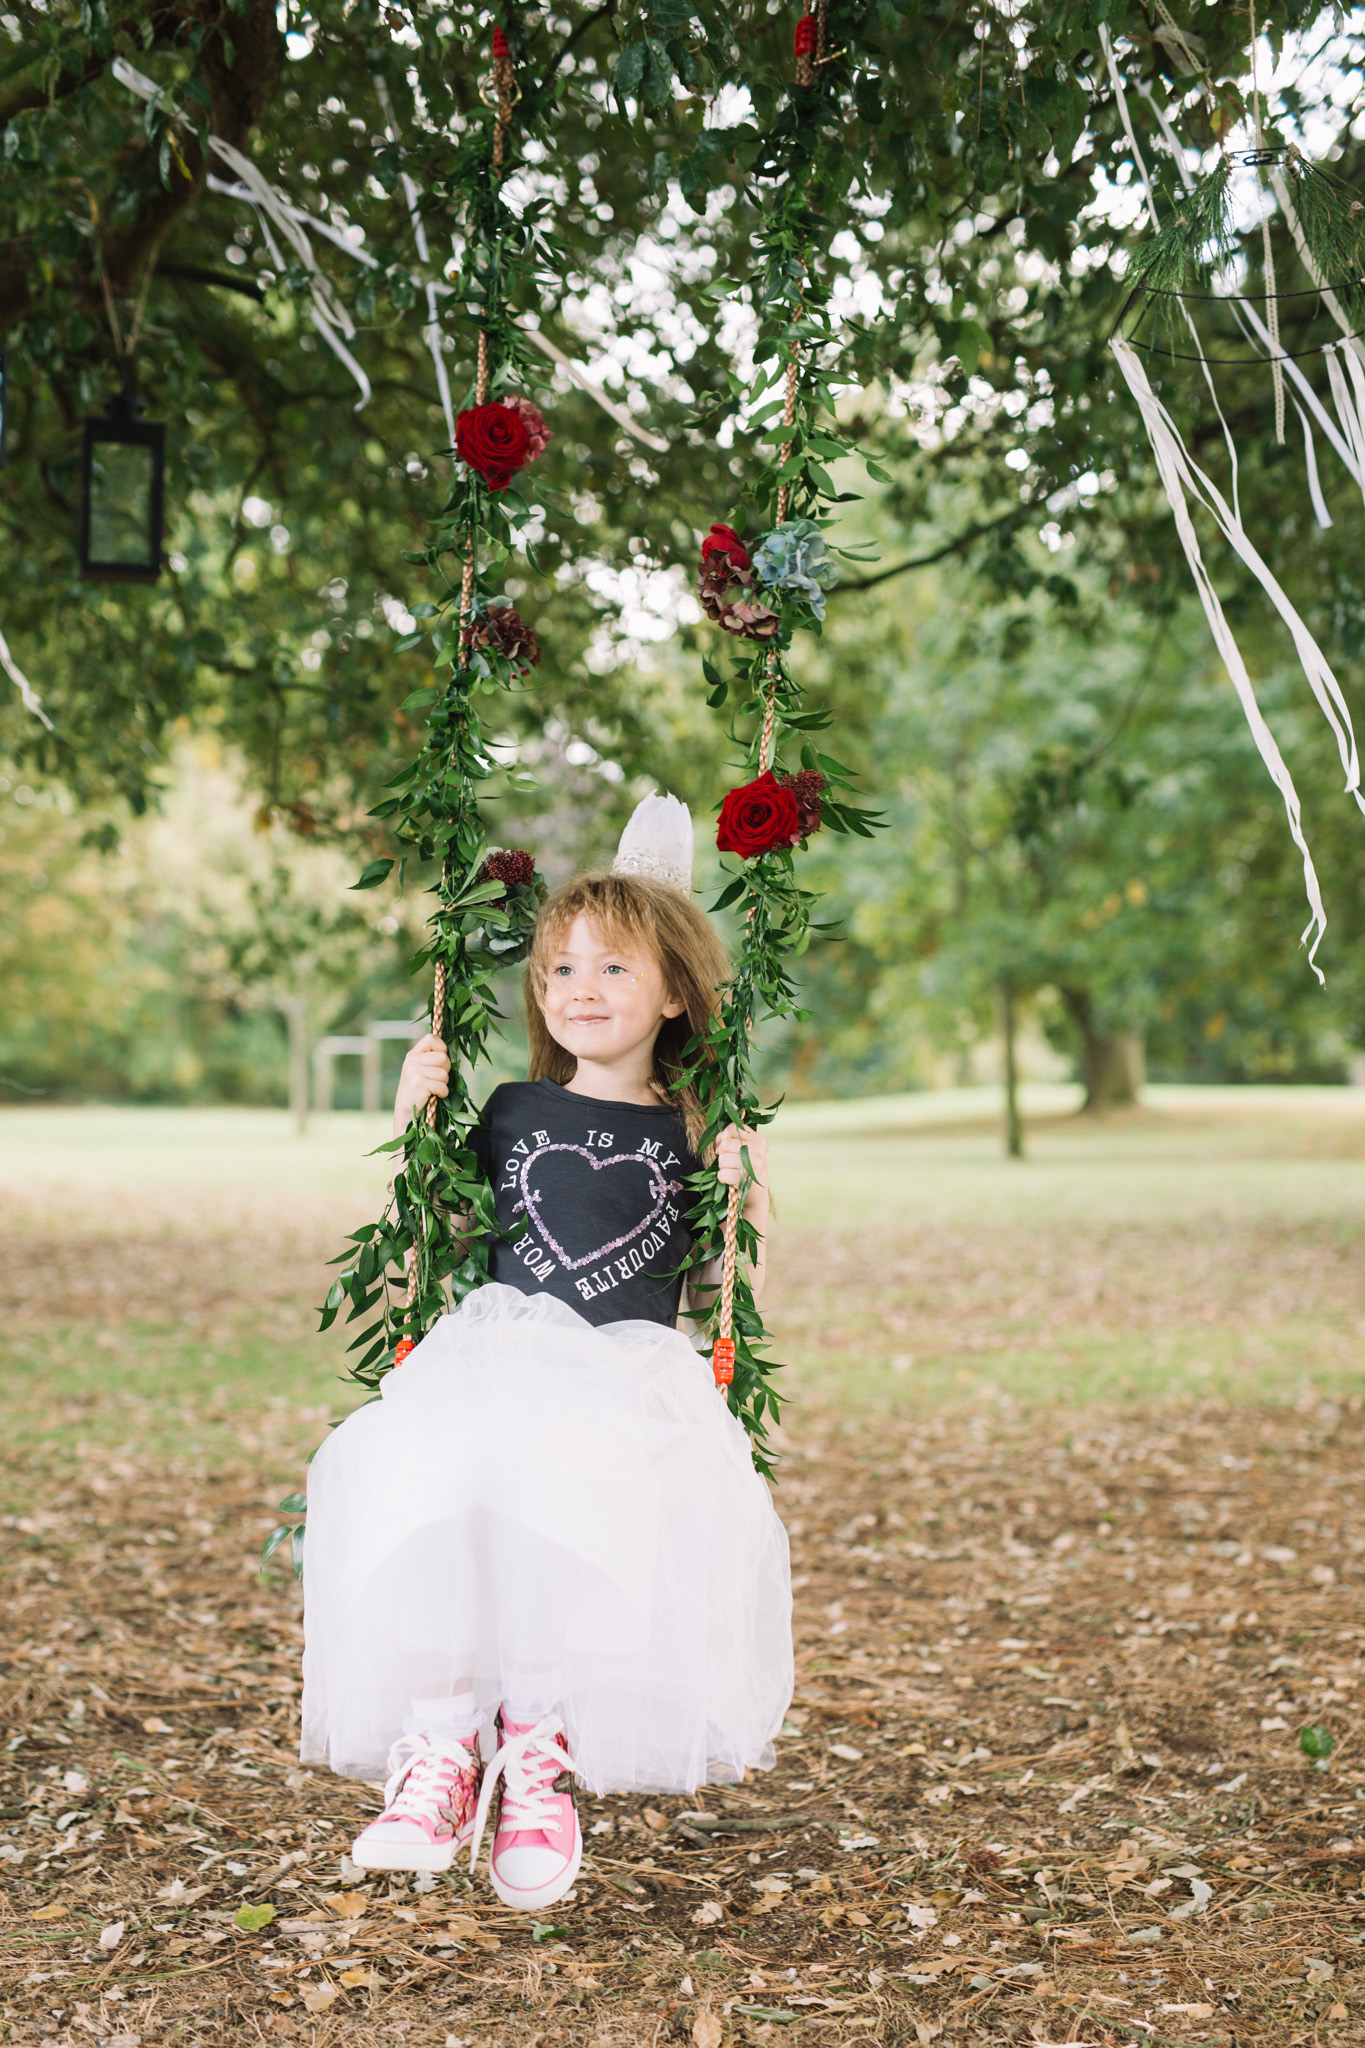 A Woodland Wonderland Wedding Journey at Kimbleton Castle